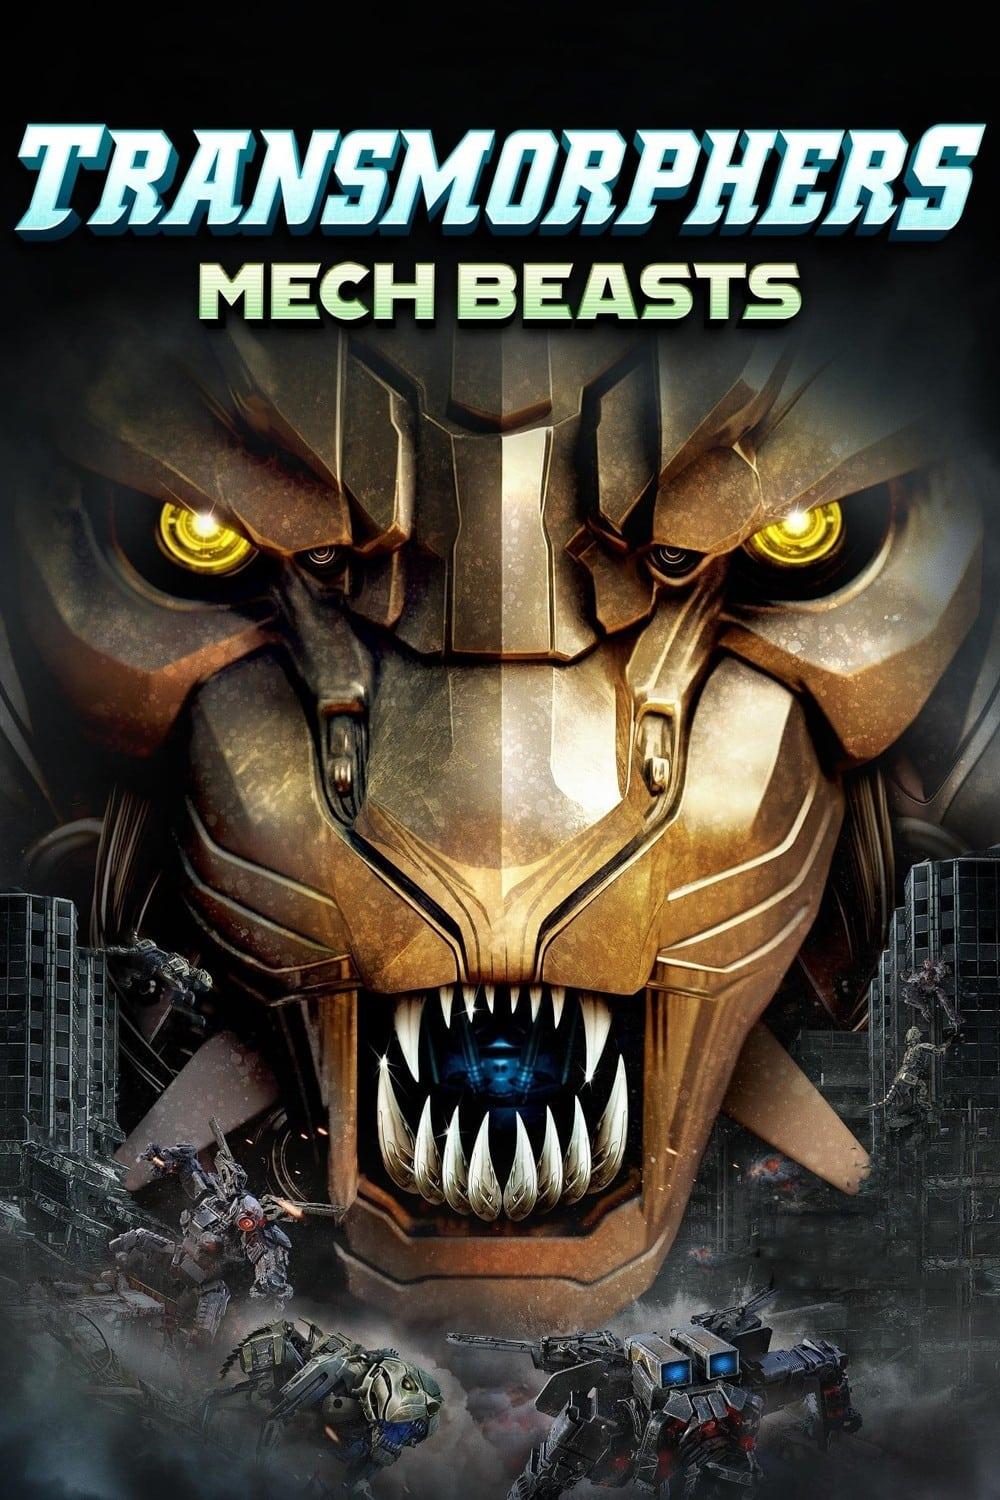 Transmorphers - Mech Beasts poster